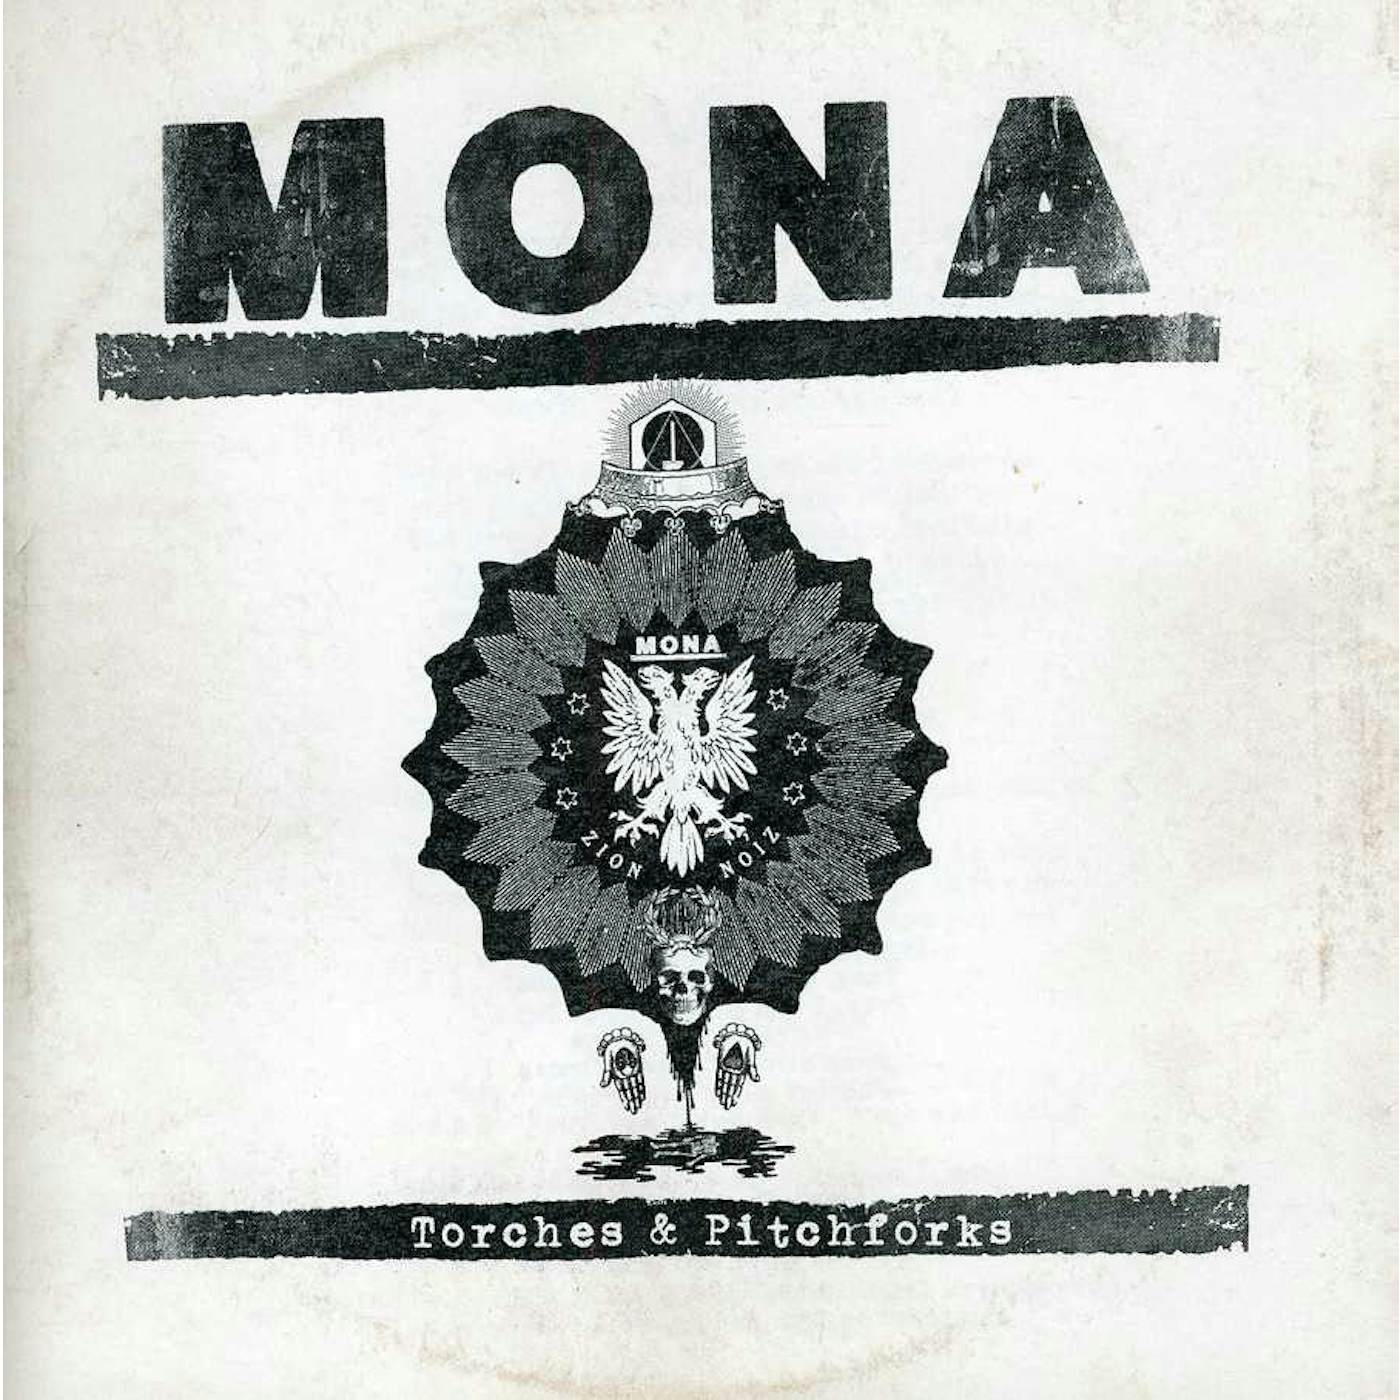 Mona TORCHES & PITCHFORKS CD